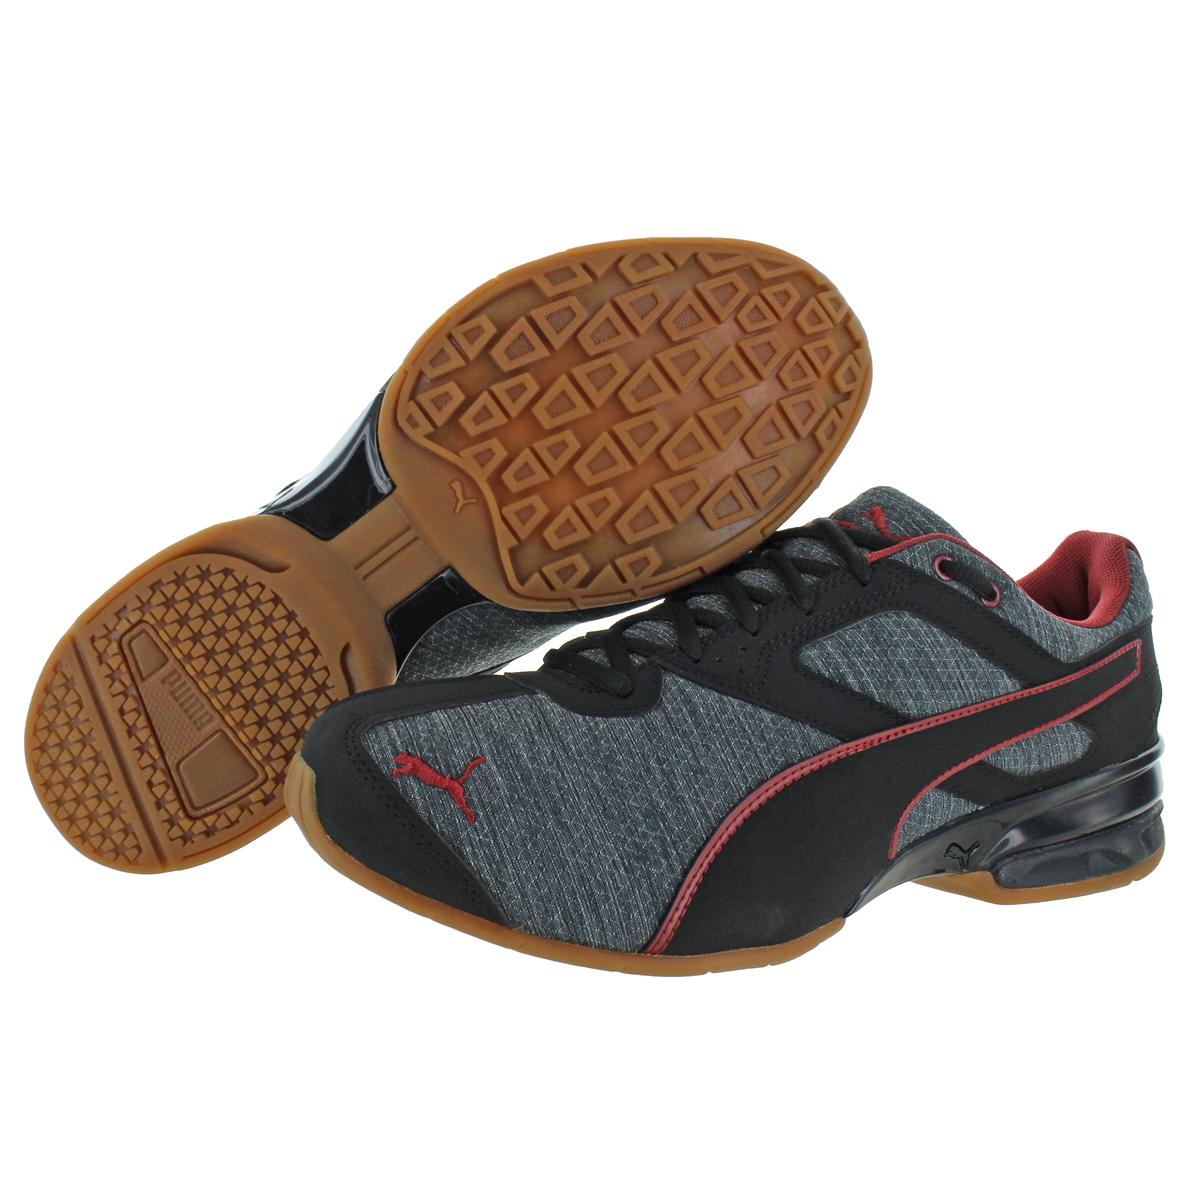 Puma Tazon 6 Mesh Men's Low-Top Cross Training Athletic Sneaker Shoes